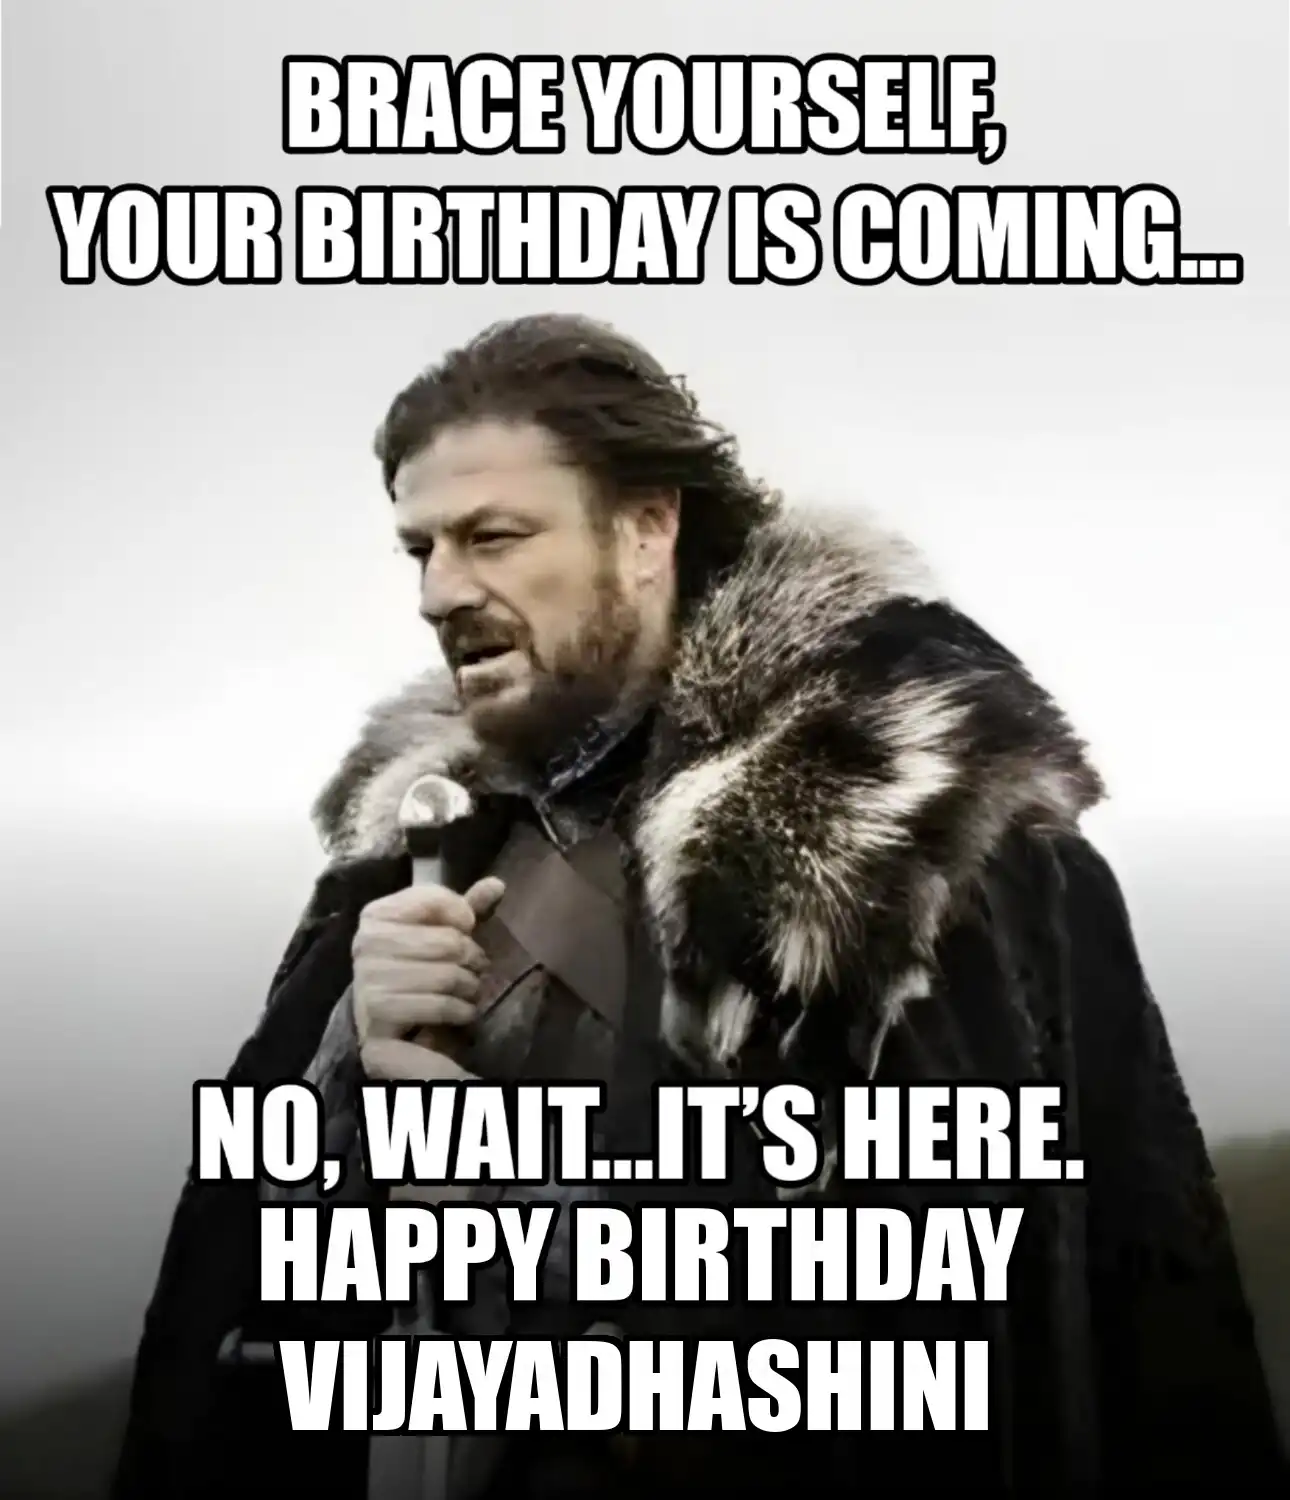 Happy Birthday Vijayadhashini Brace Yourself Your Birthday Is Coming Meme